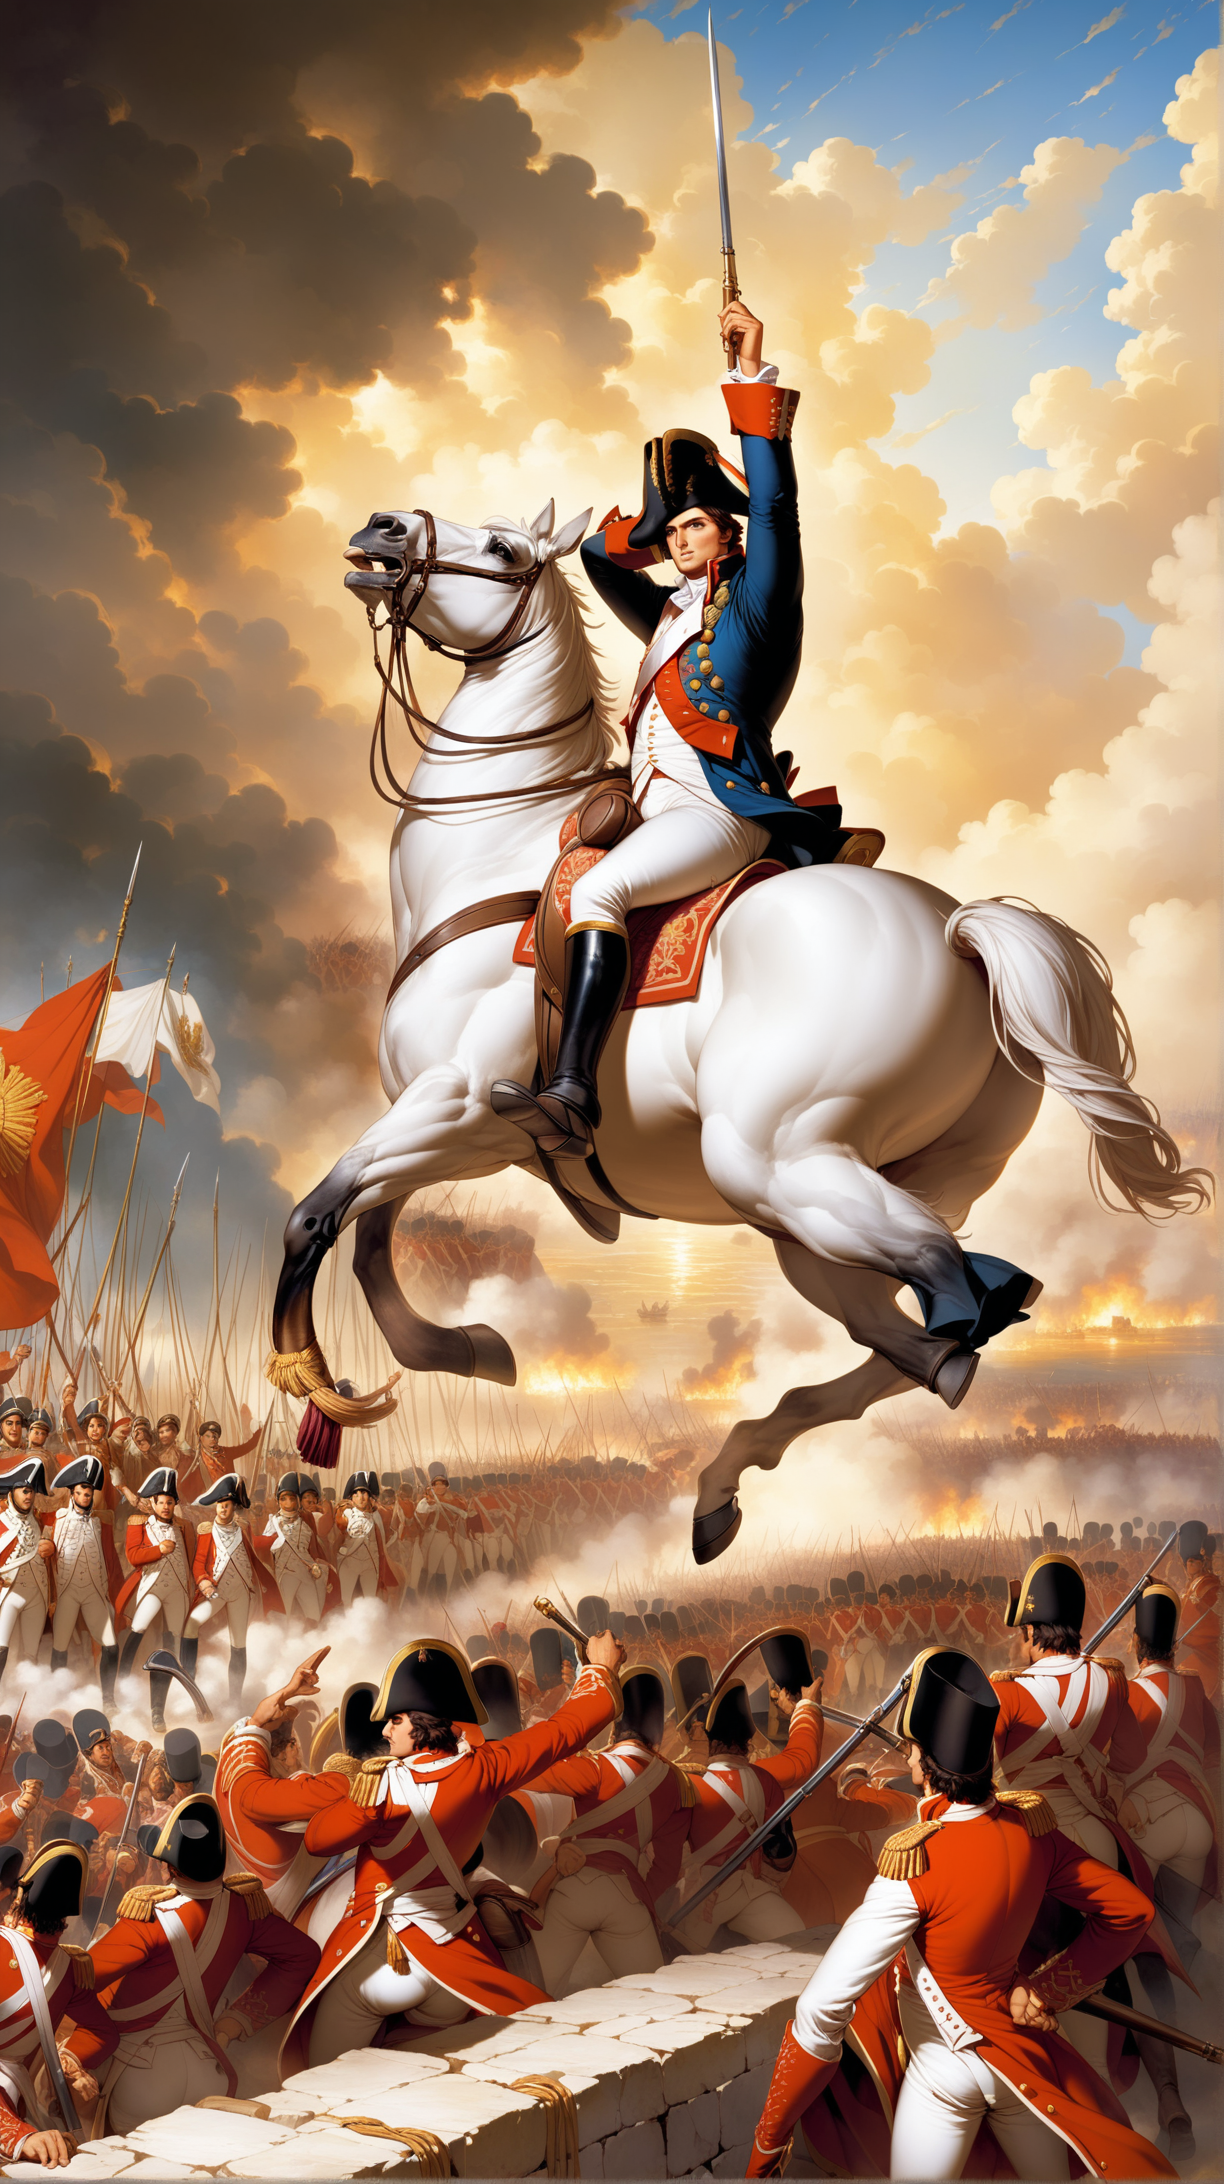 Napoleon Bonaparte Leading Troops to Victory